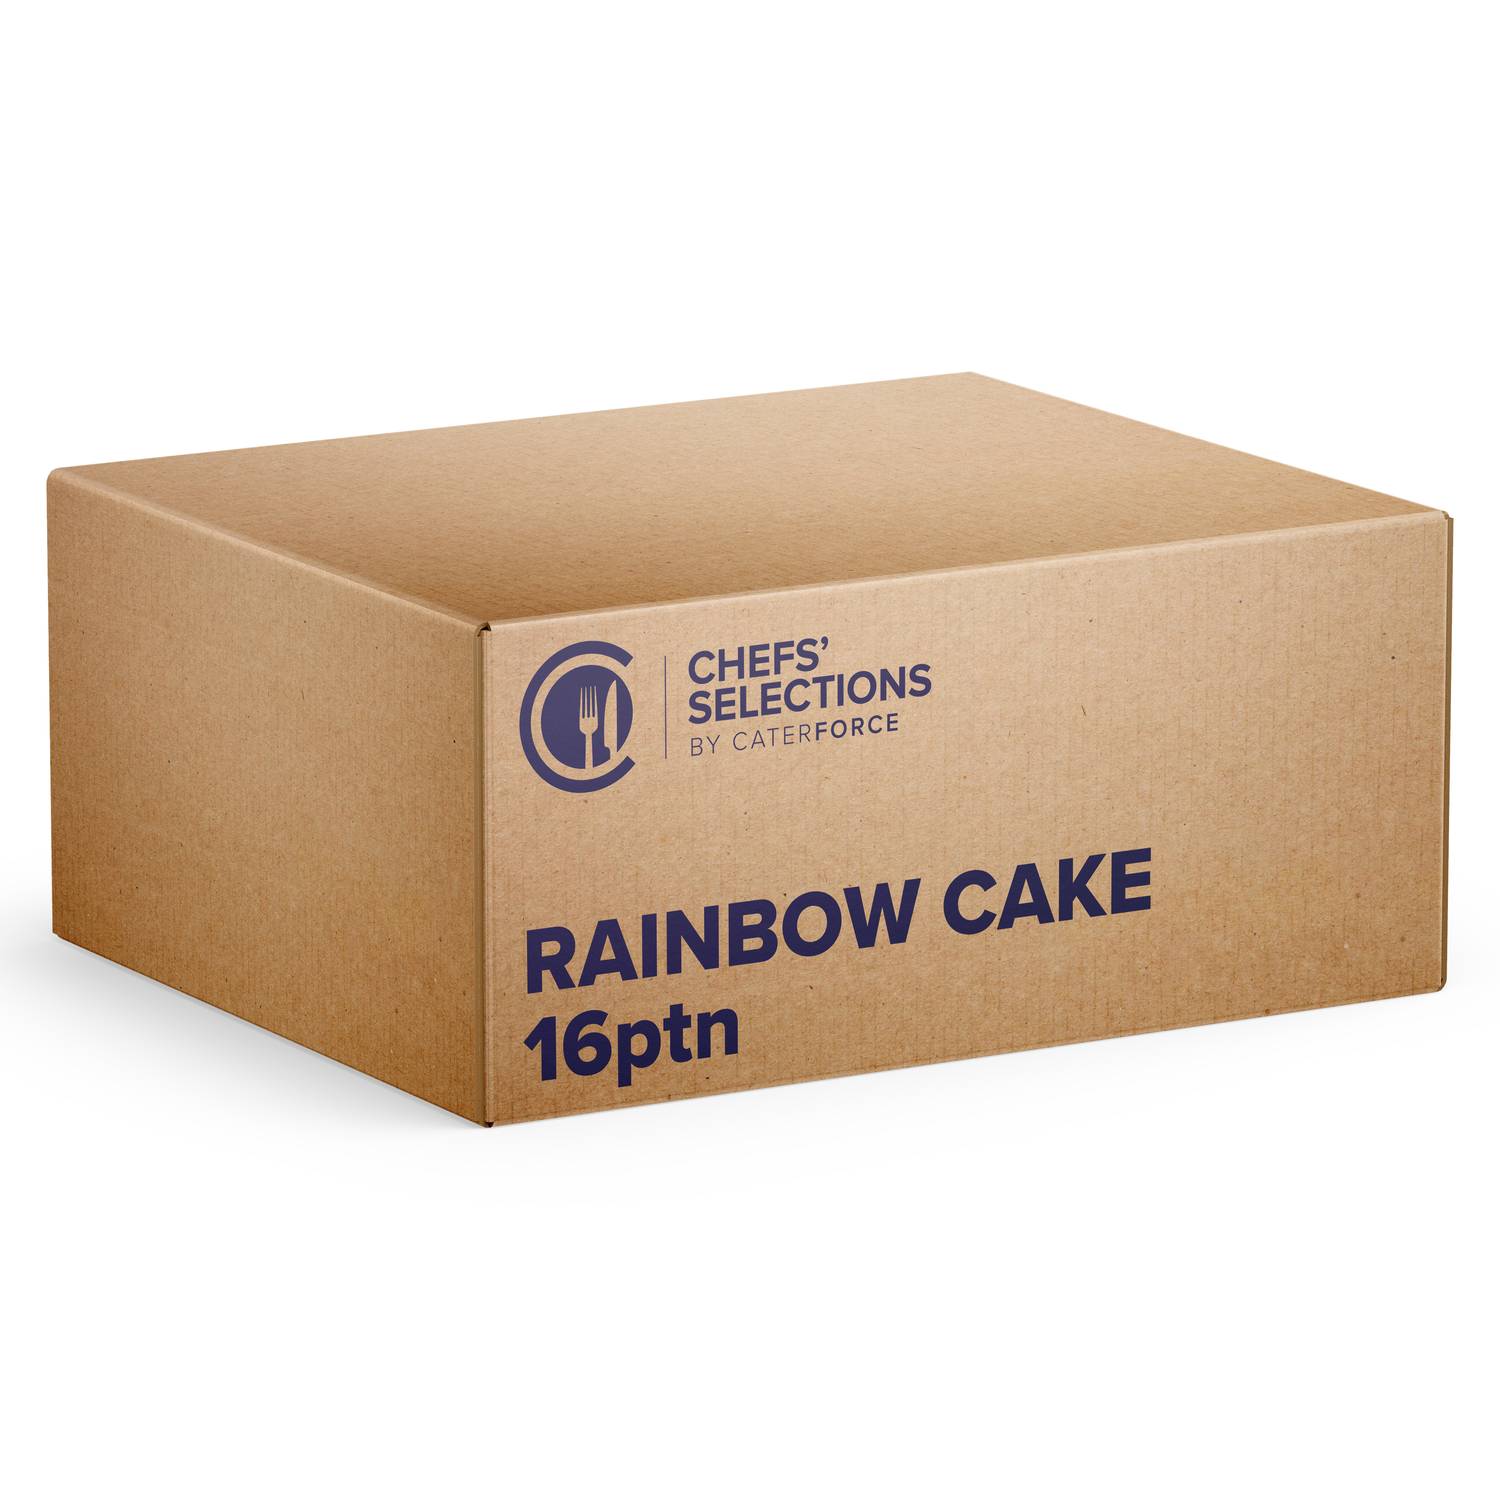 Chefs’ Selections Rainbow Cake (1 x 16p/ptn)